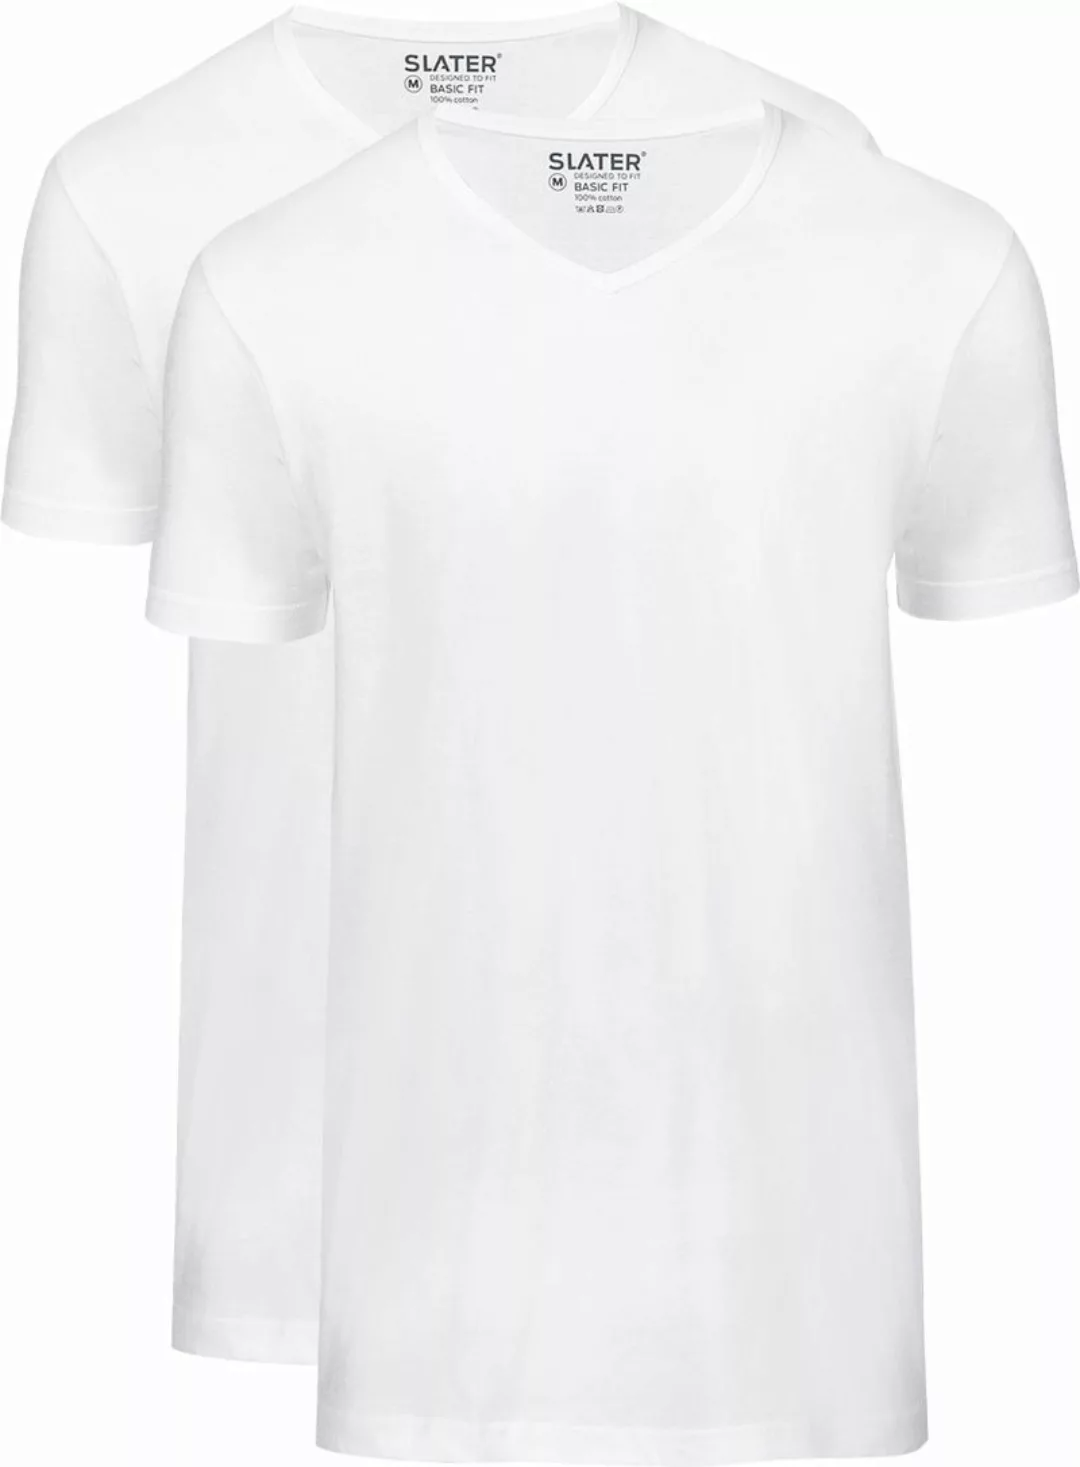 Slater 2er-Pack Basic Fit T-shirt V-Ausschnitt Weiß - Größe S günstig online kaufen